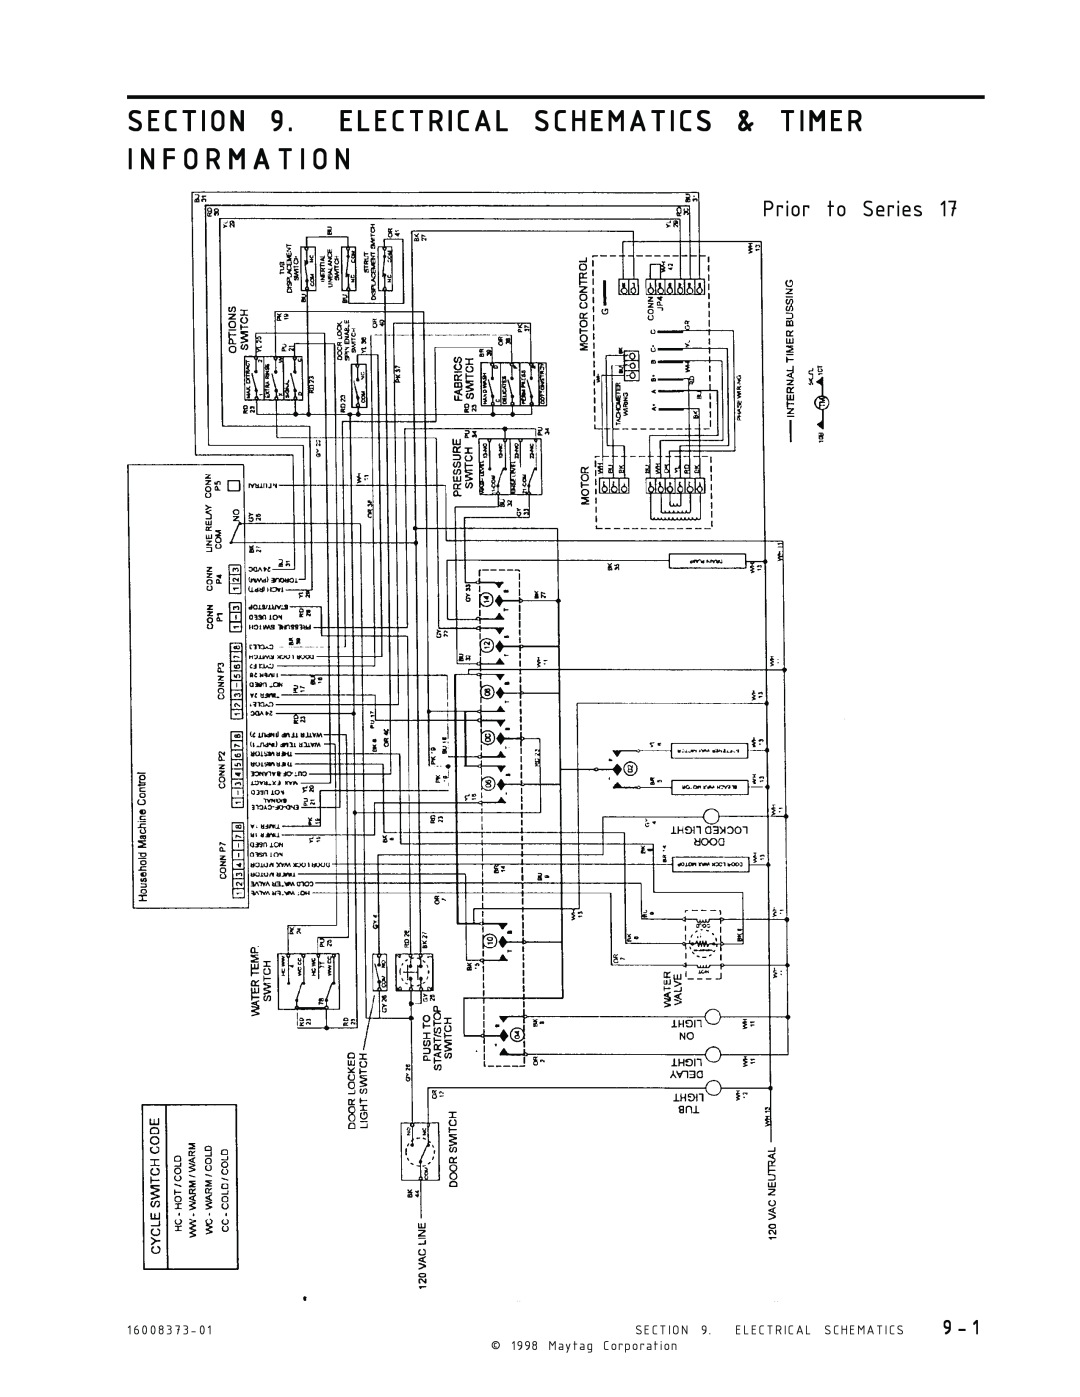 Whirlpool MAH3000 Electrical Schematics & Timer I N F O R M A T I O N, Prior to Series, Section, Maytag Corporation 